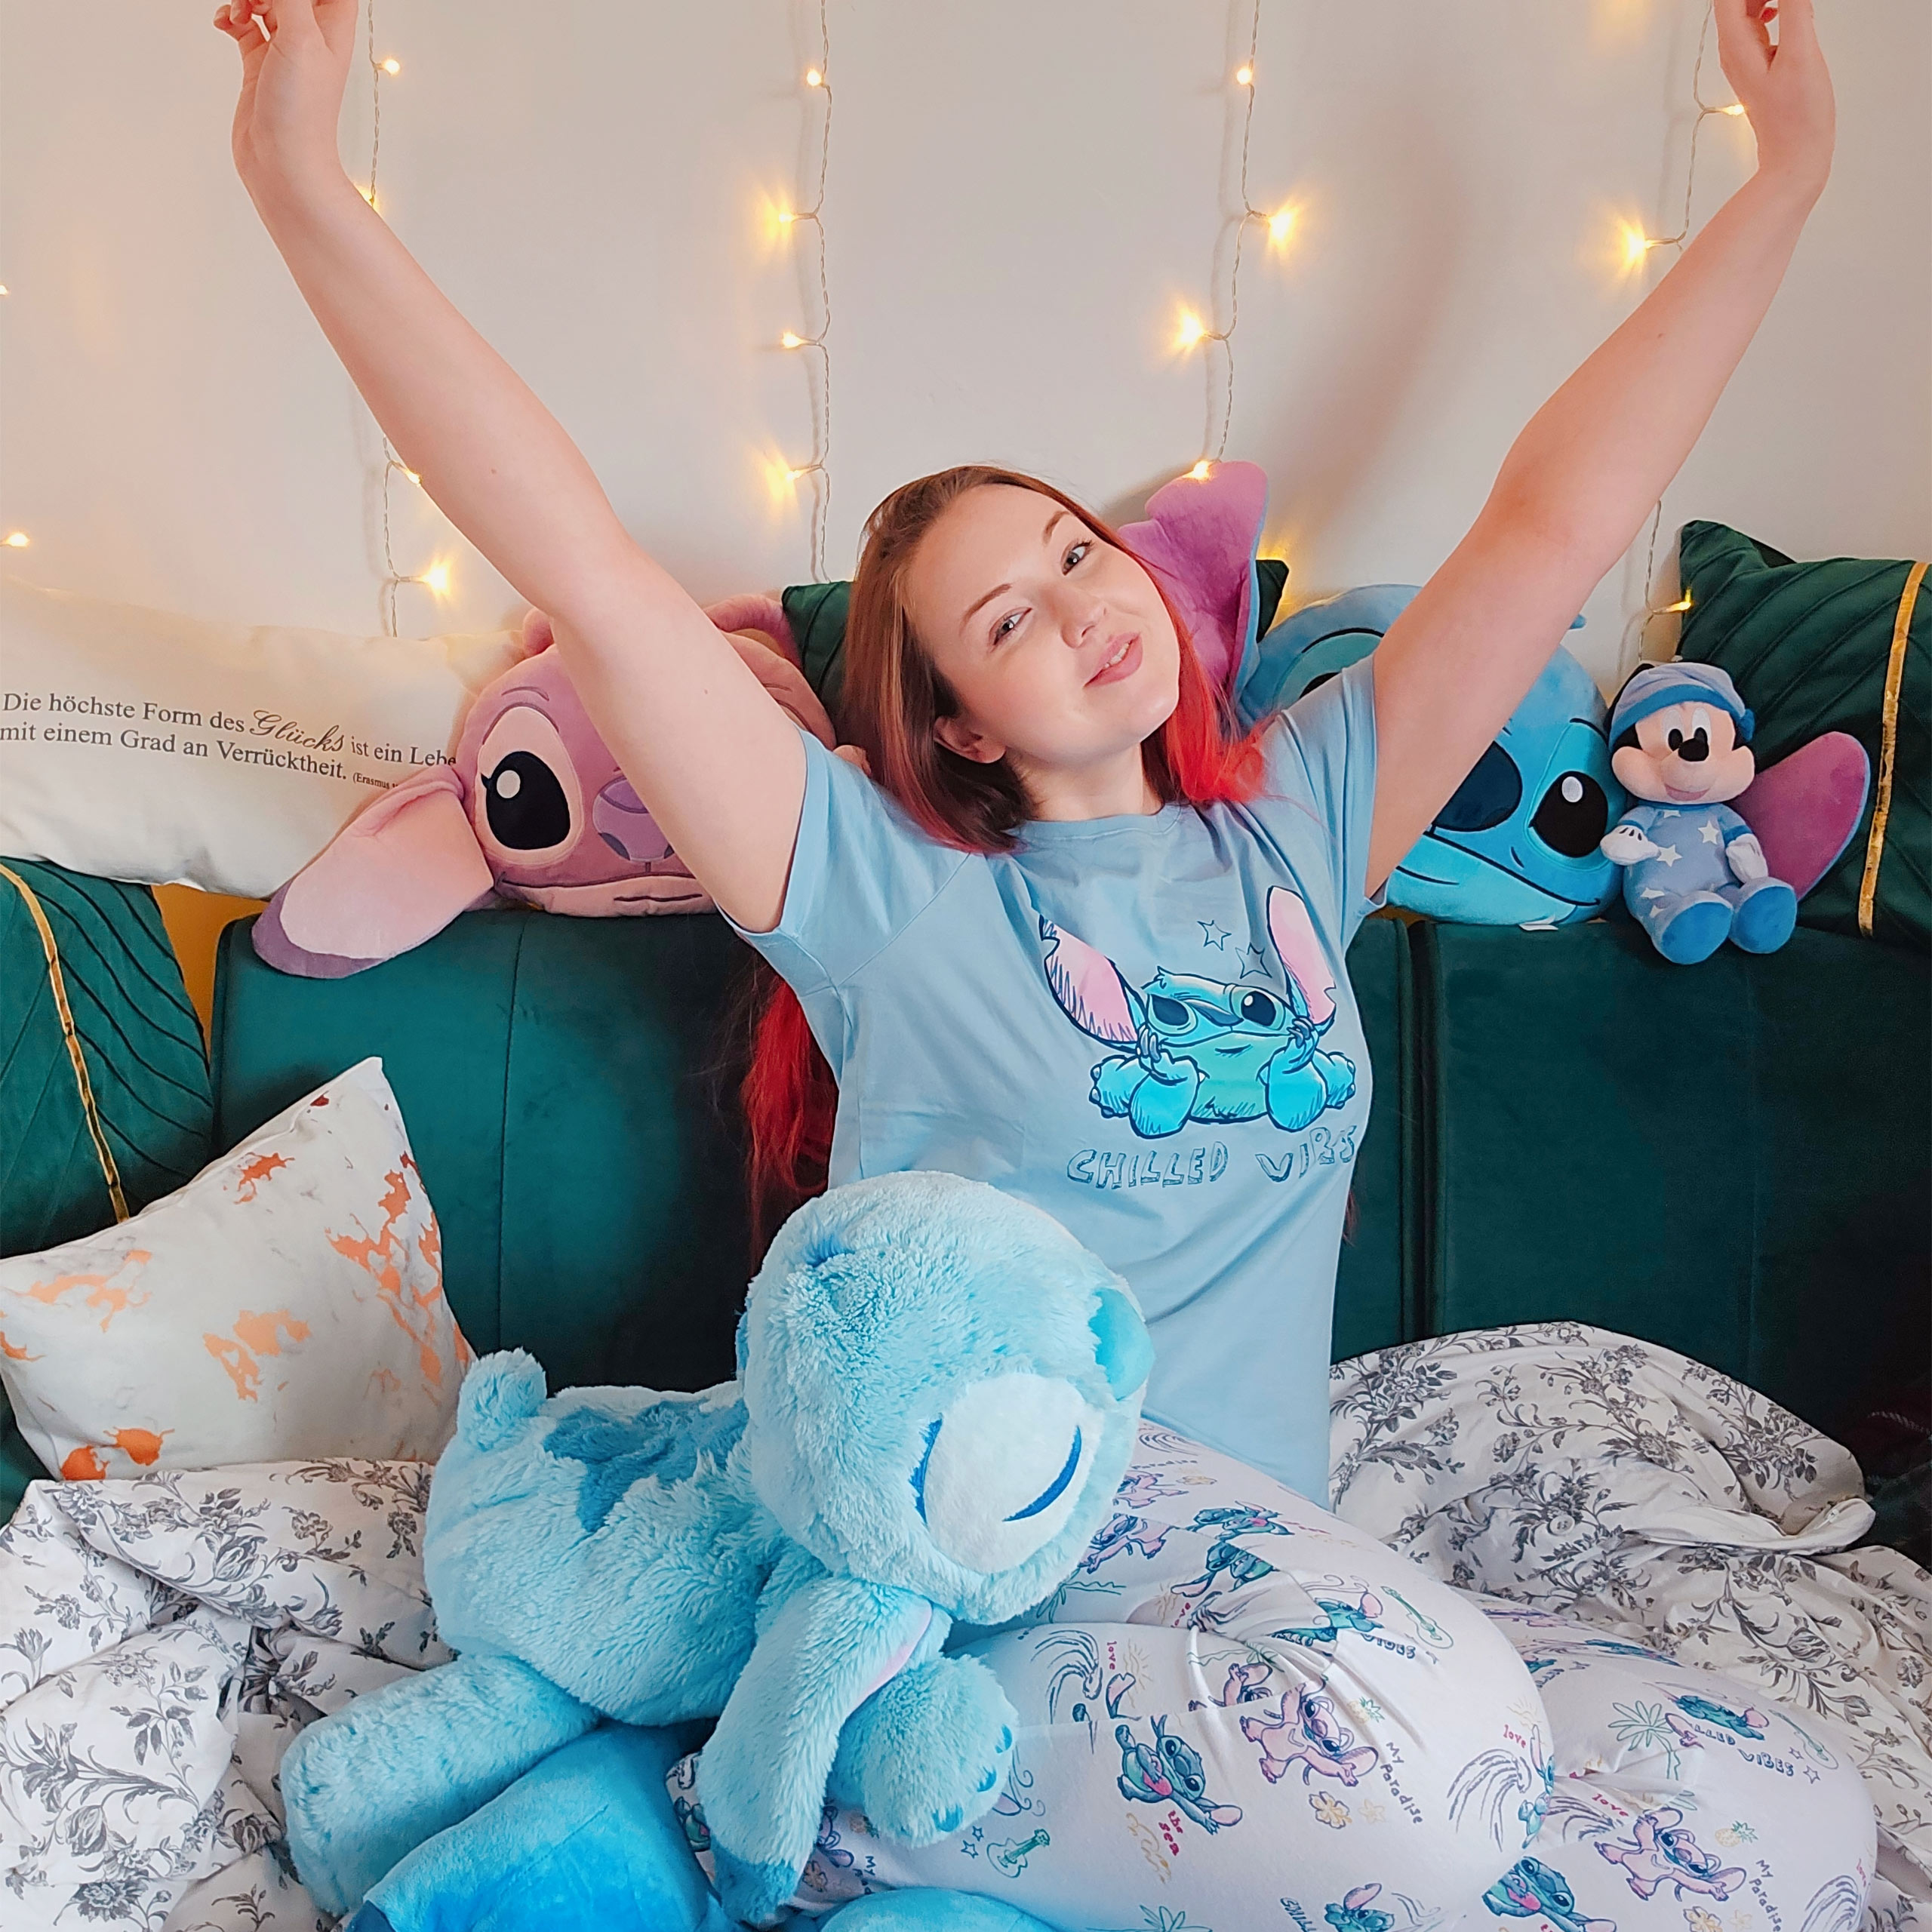 Lilo & Stitch - Chilled Vibes Pyjama Women